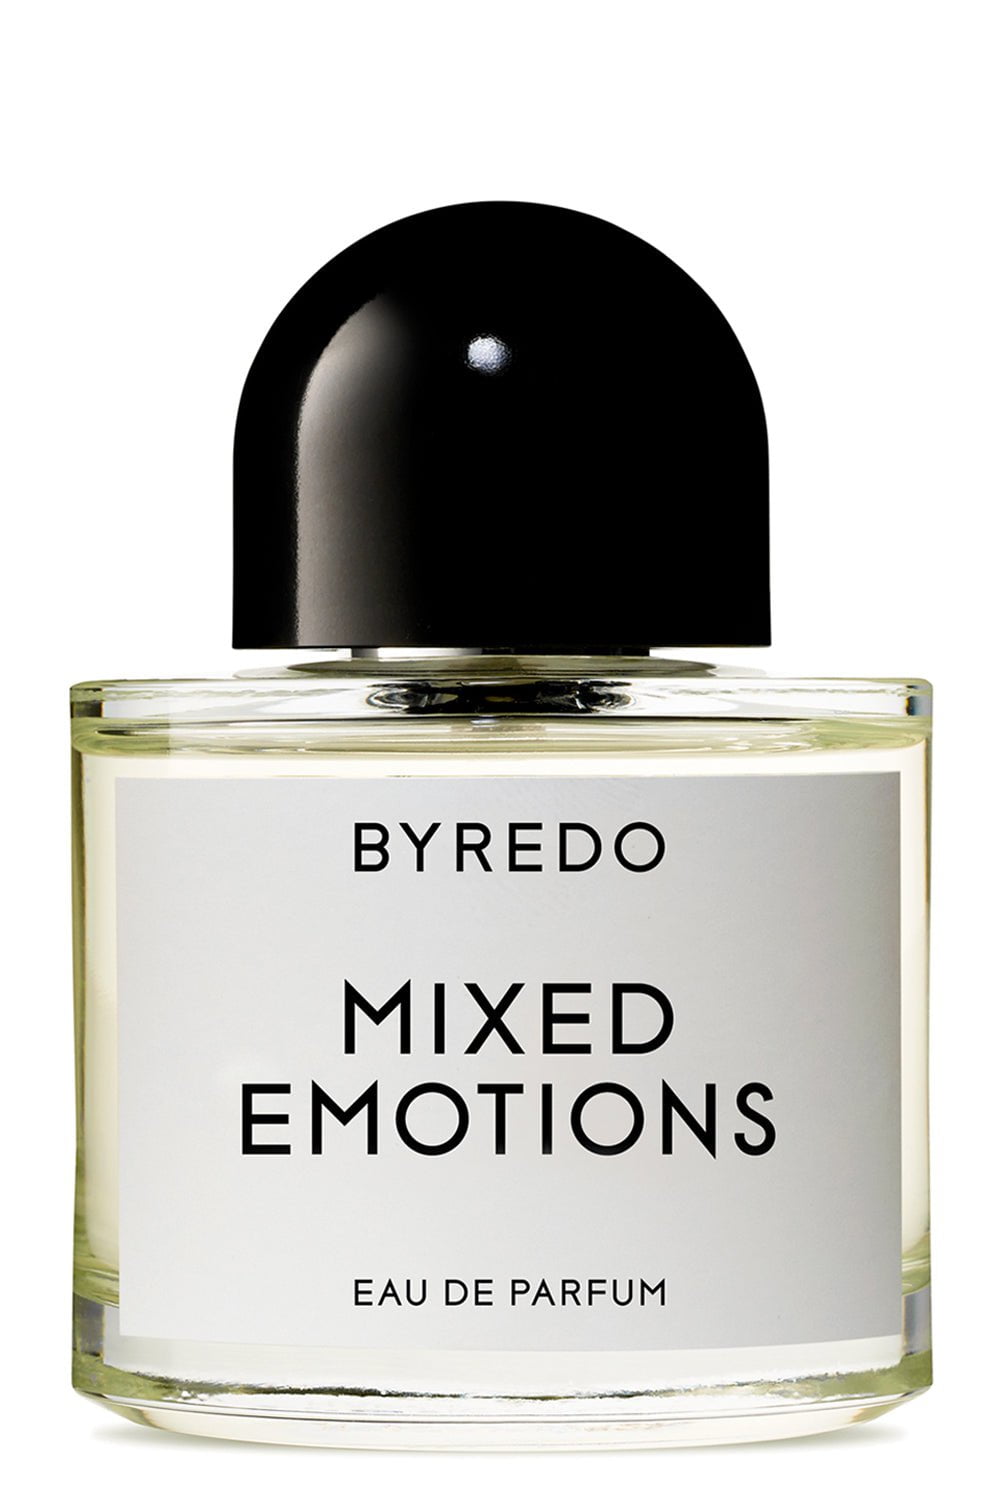 BYREDO-Mixed Emotions - 50ml-MIXED EMOTIONS